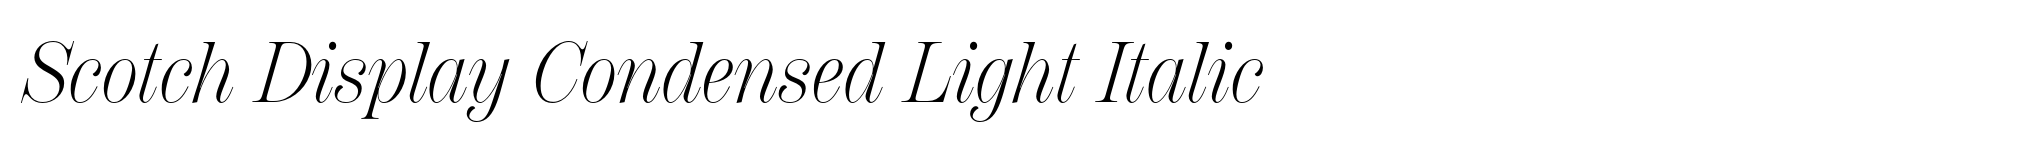 Scotch Display Condensed Light Italic image